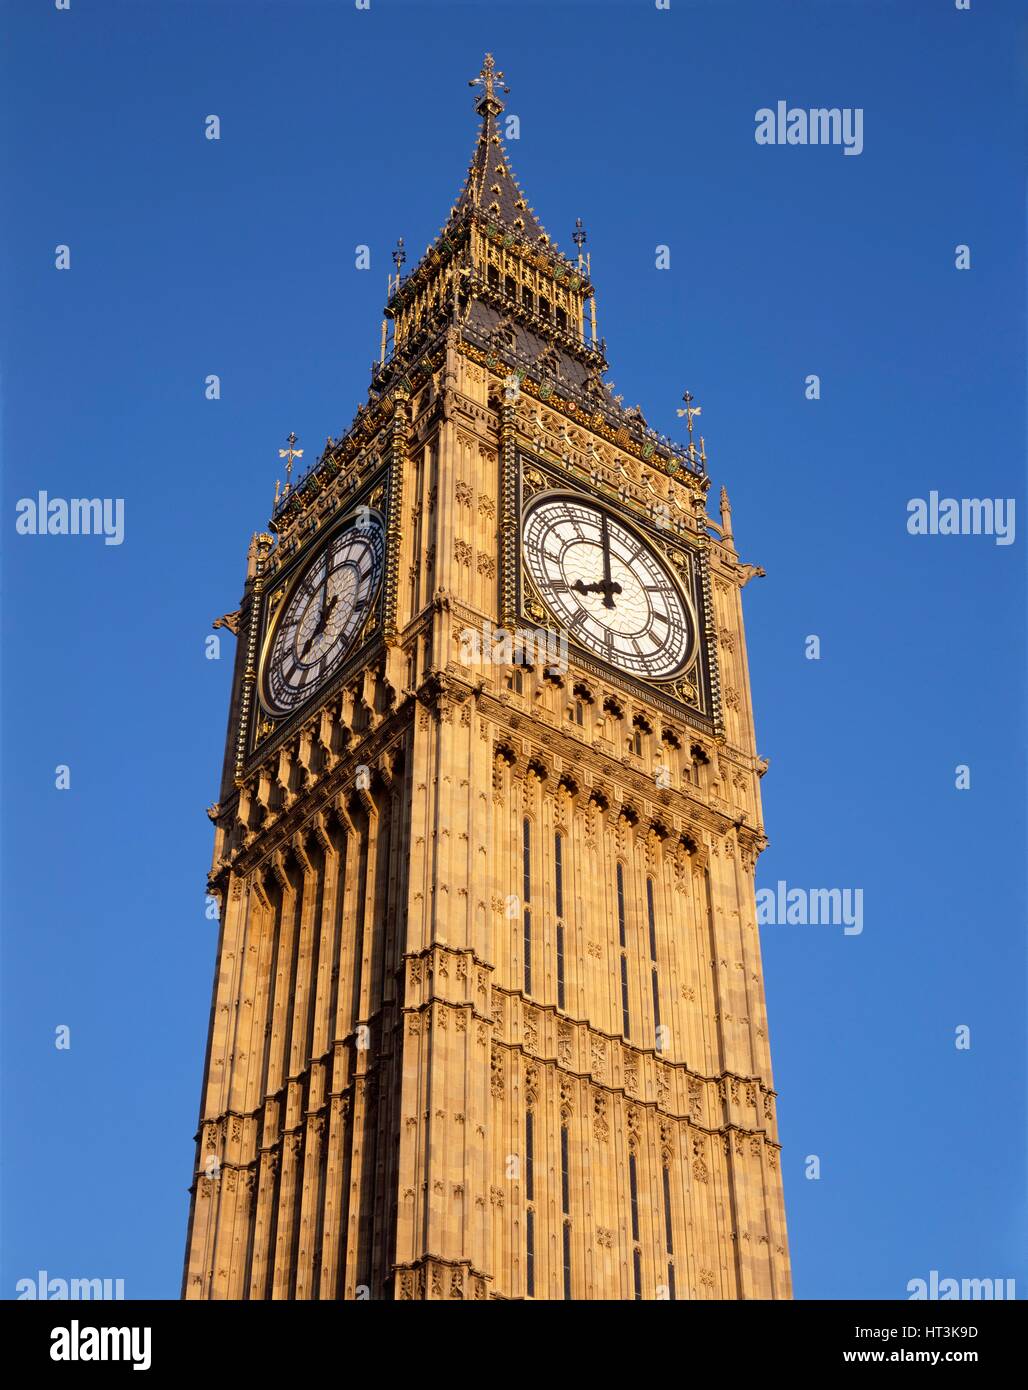 Big Ben ' Tour de l'horloge, c1990-2010. Artiste : Inconnu. Banque D'Images